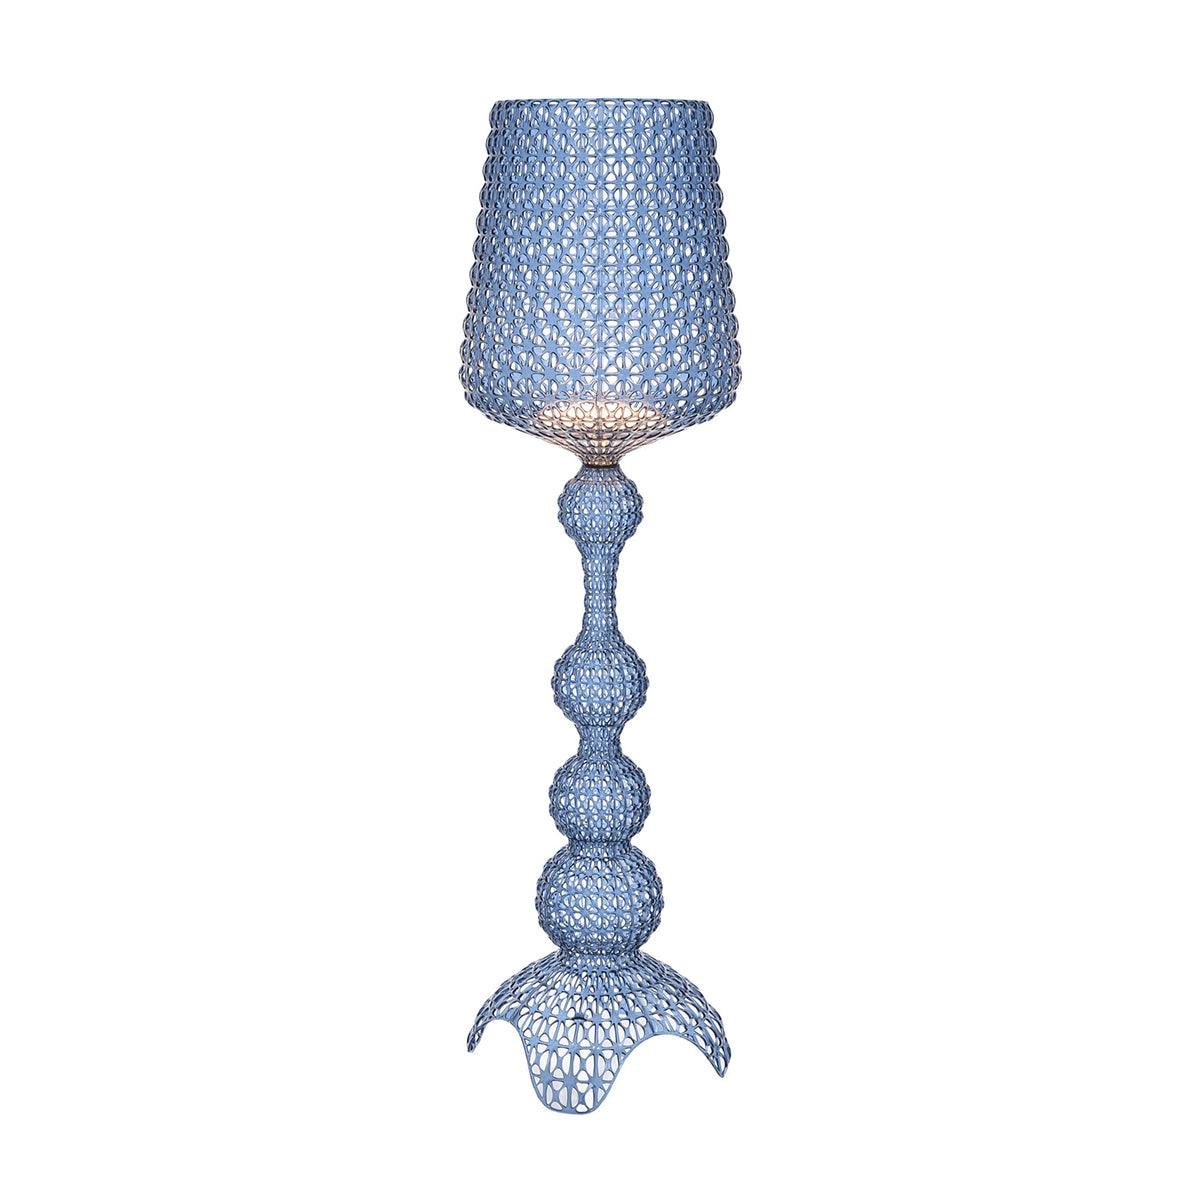 Blue Kabuki Floor Lamp with EU Plug, Diameter 50cm x Height 166cm, 19.7" x 65.3"